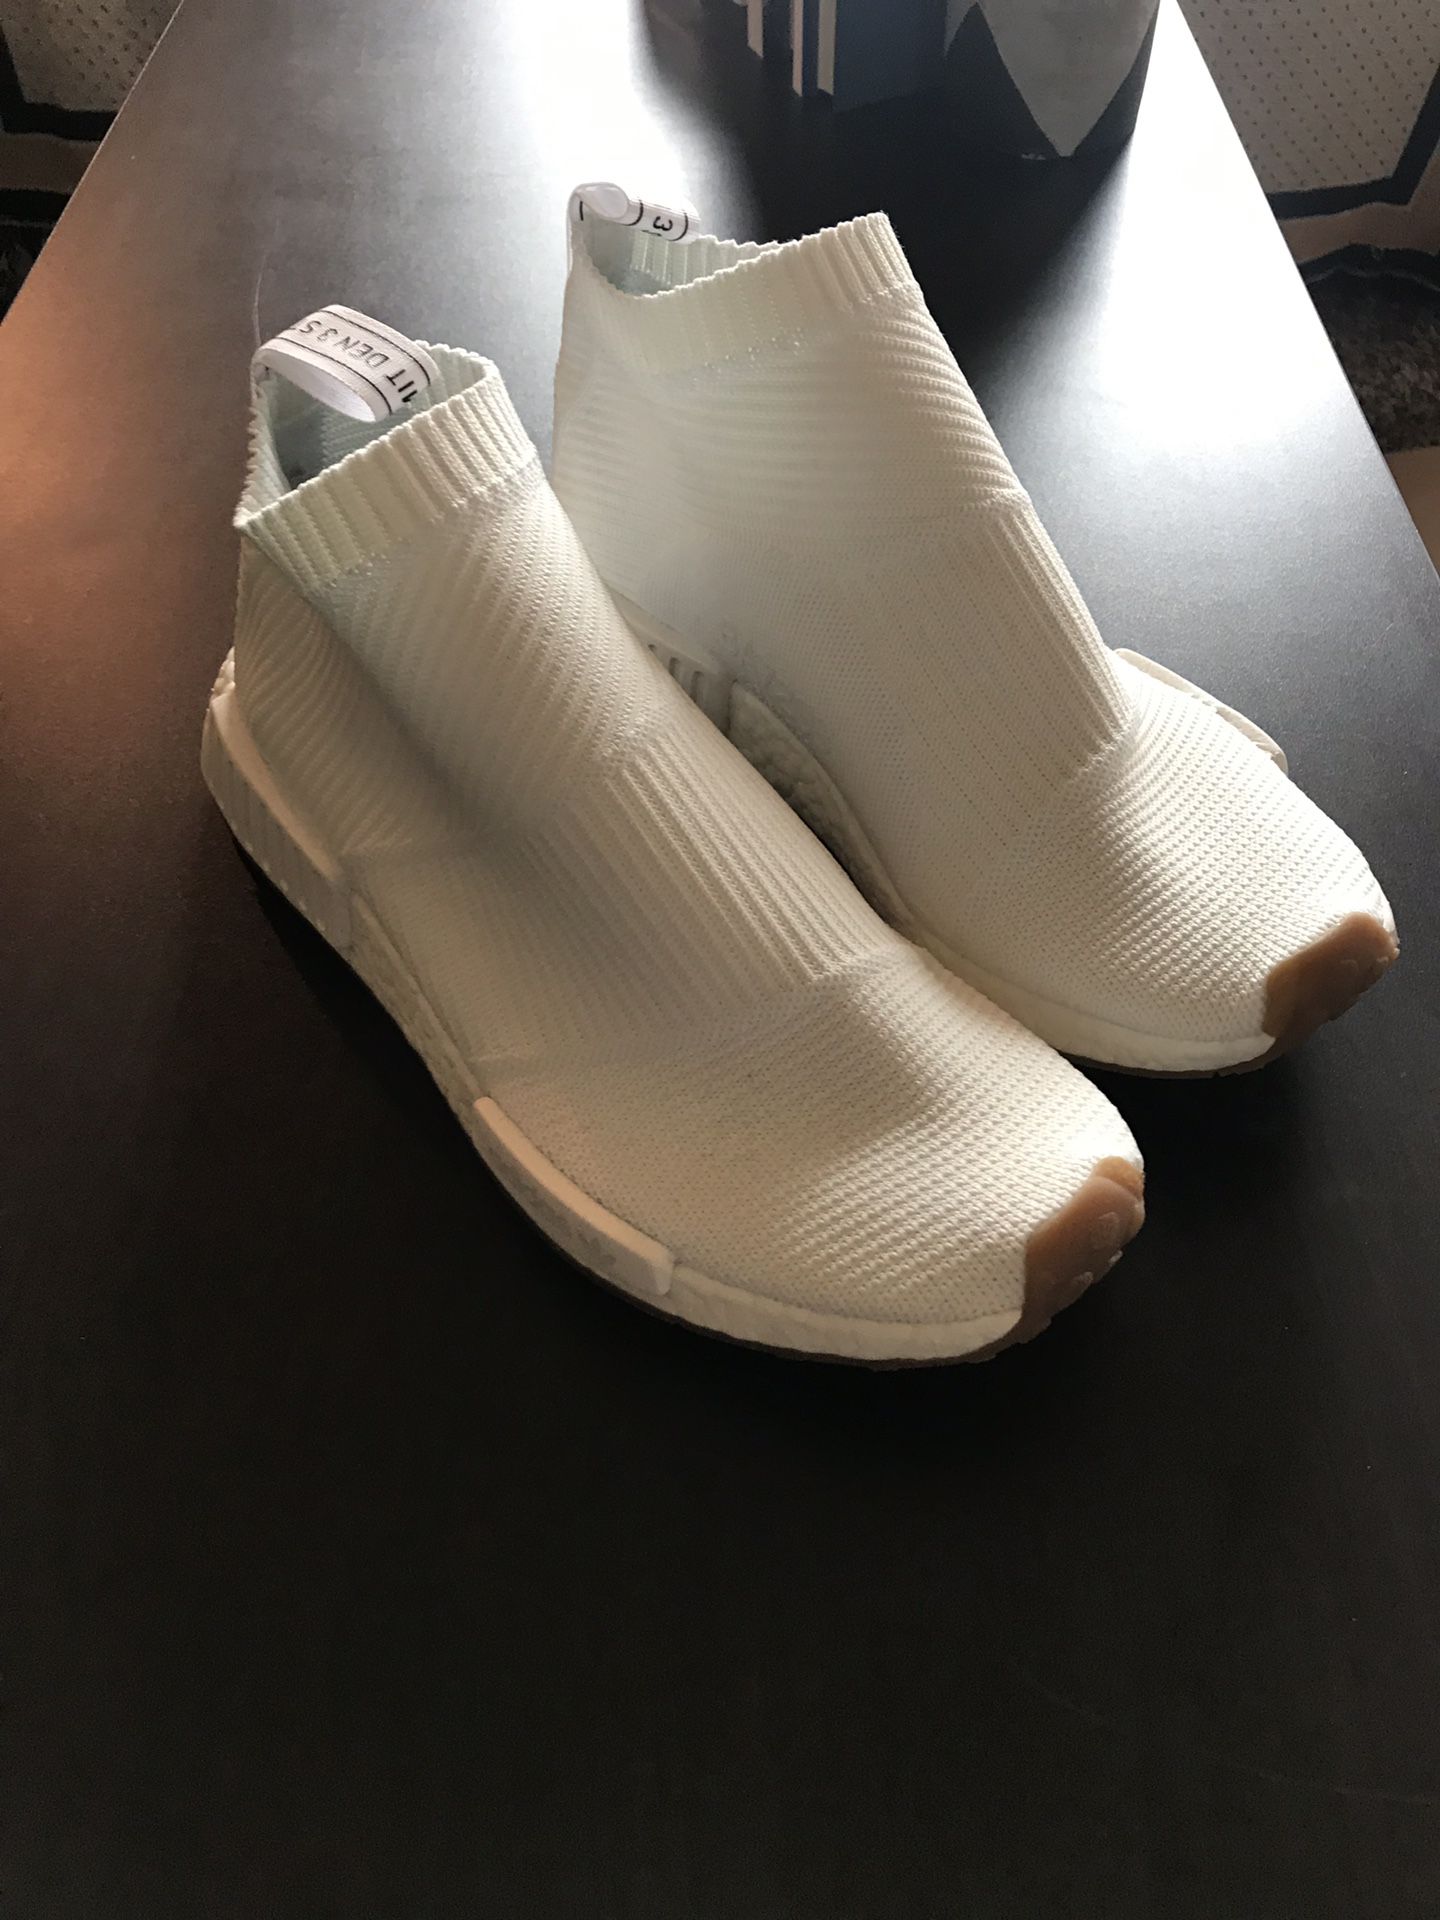 Adidas City Socks